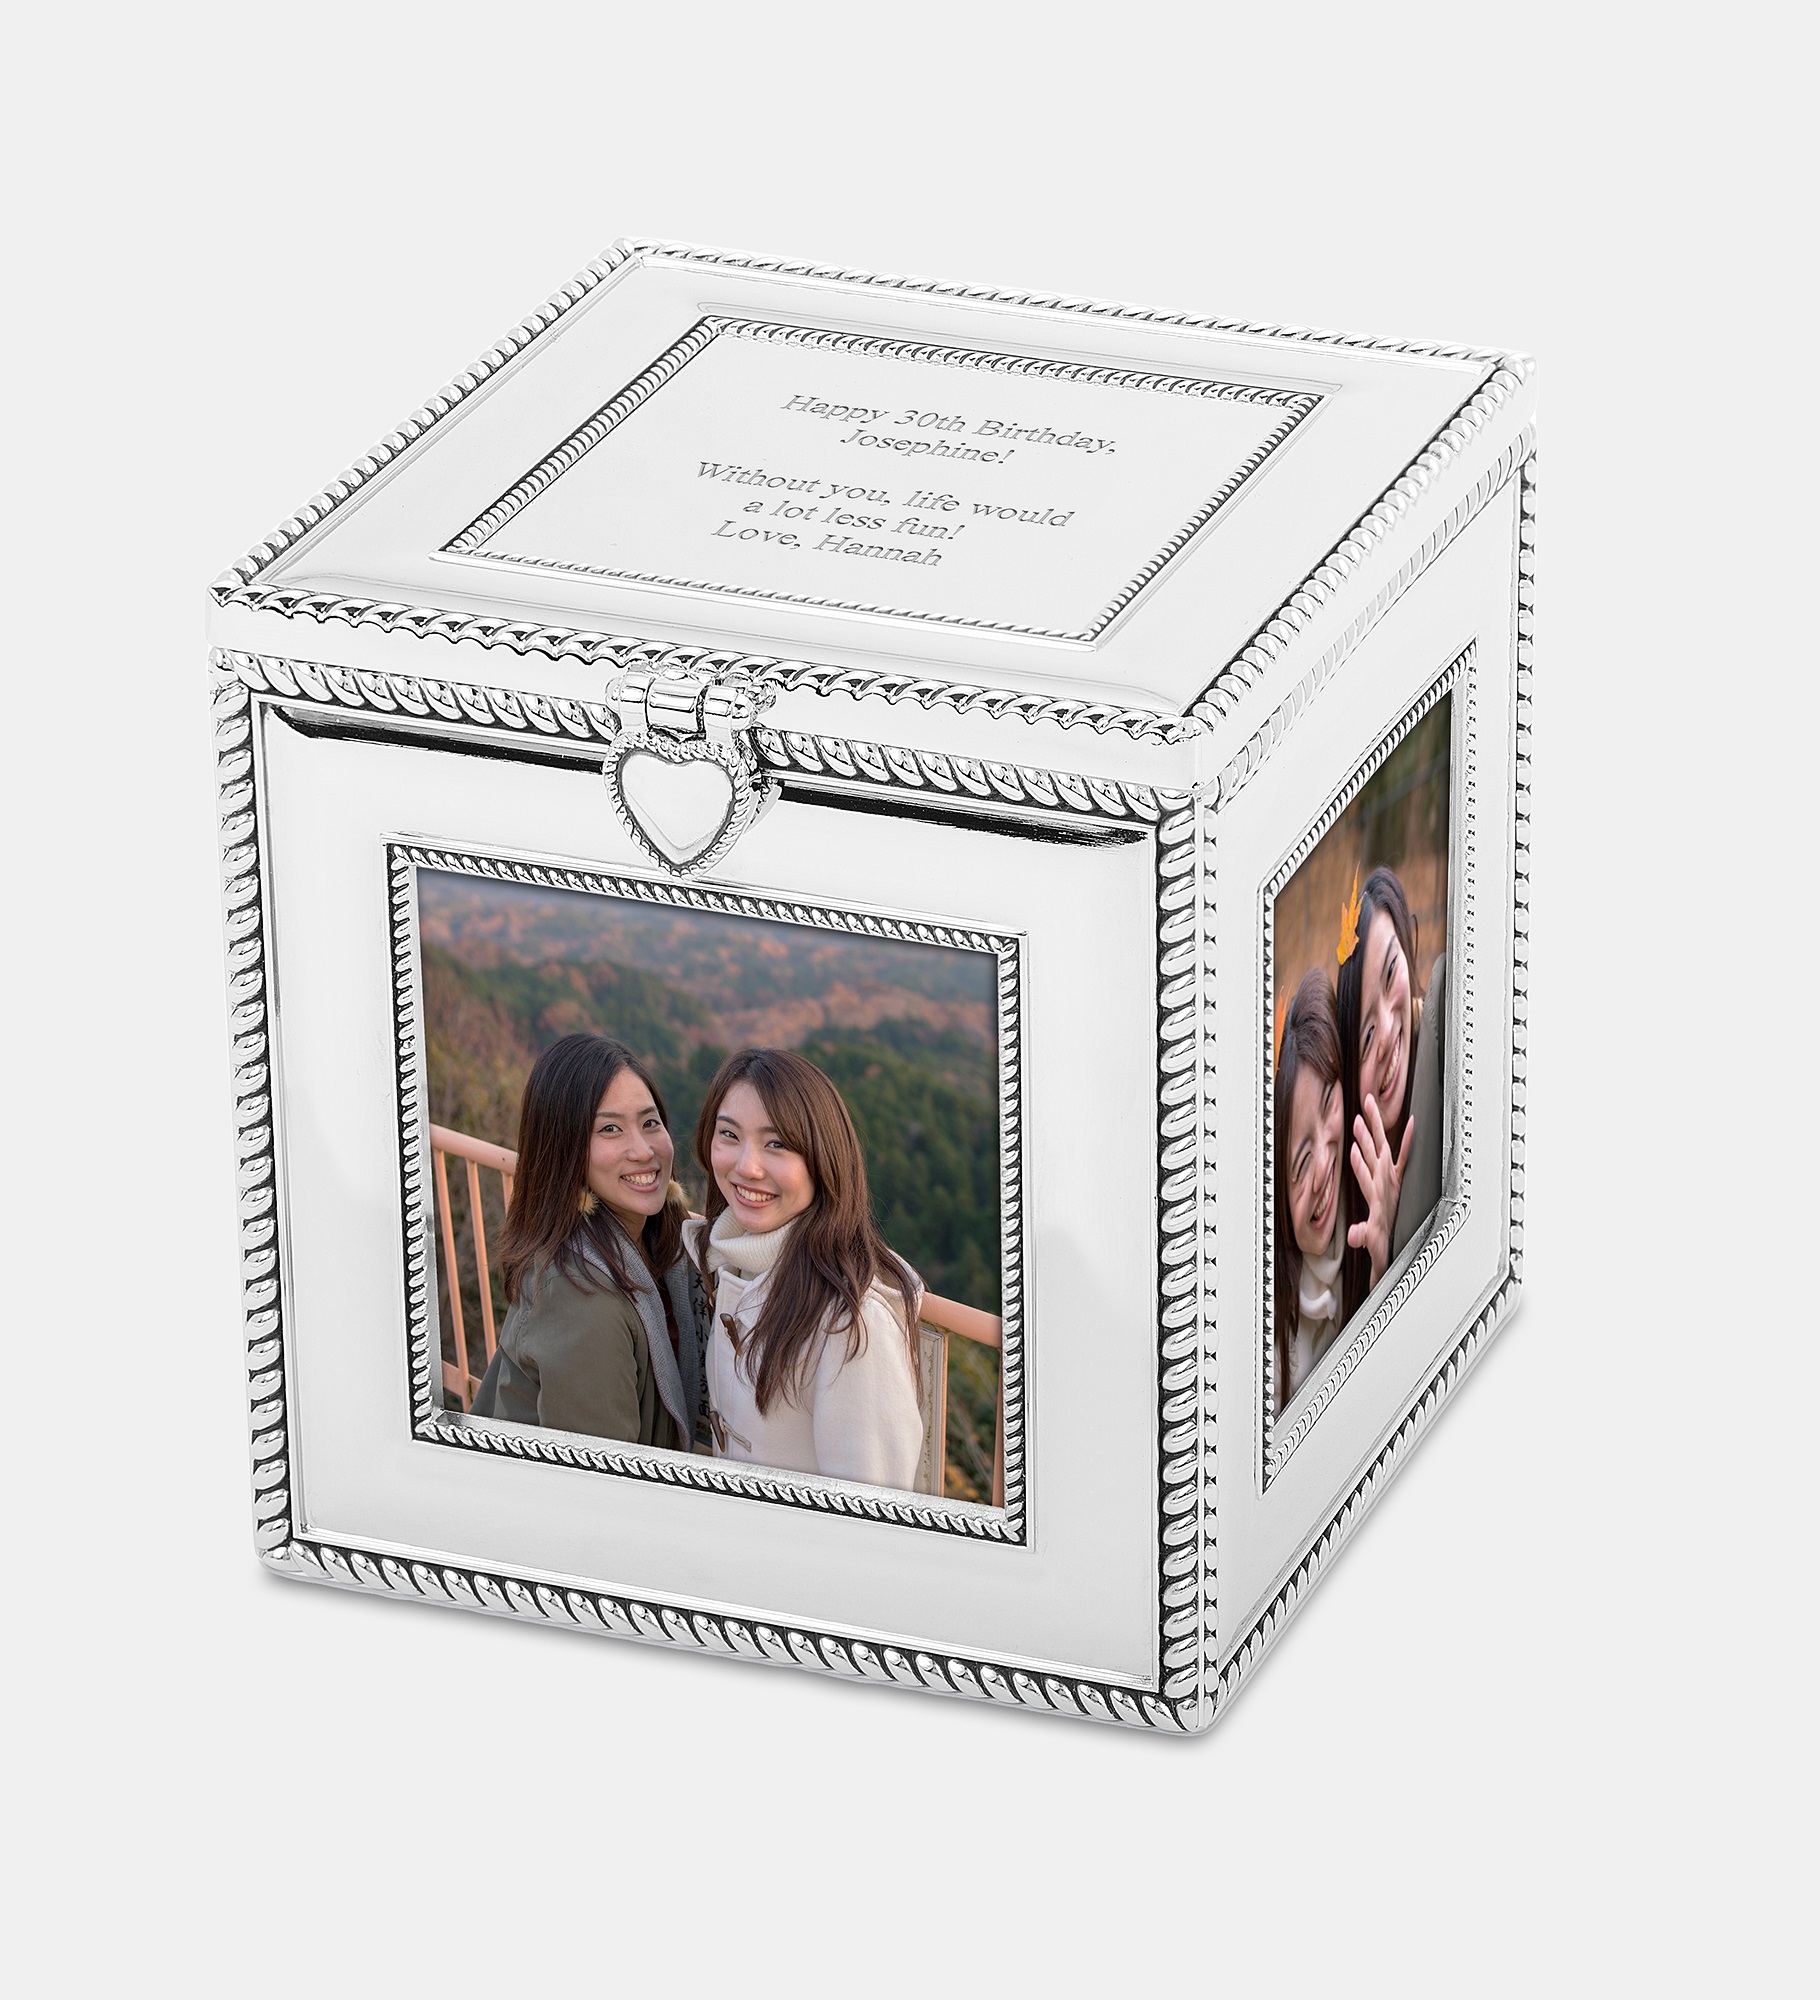  Engraved Silver Cube Frame and Keepsake Box